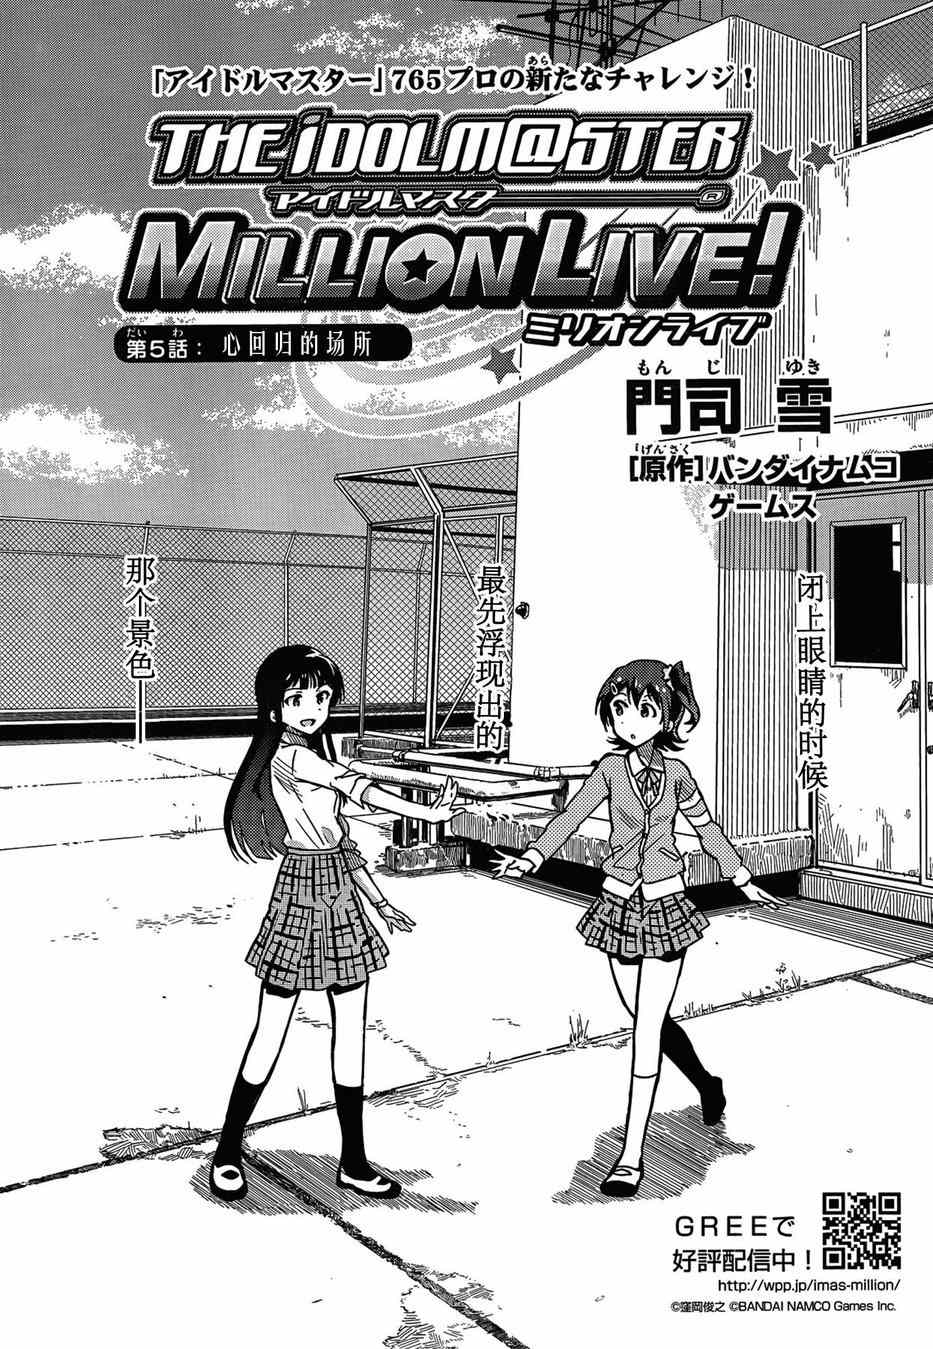 《偶像大师 MILLION LIVE!》漫画 MILLION LIVE 005集